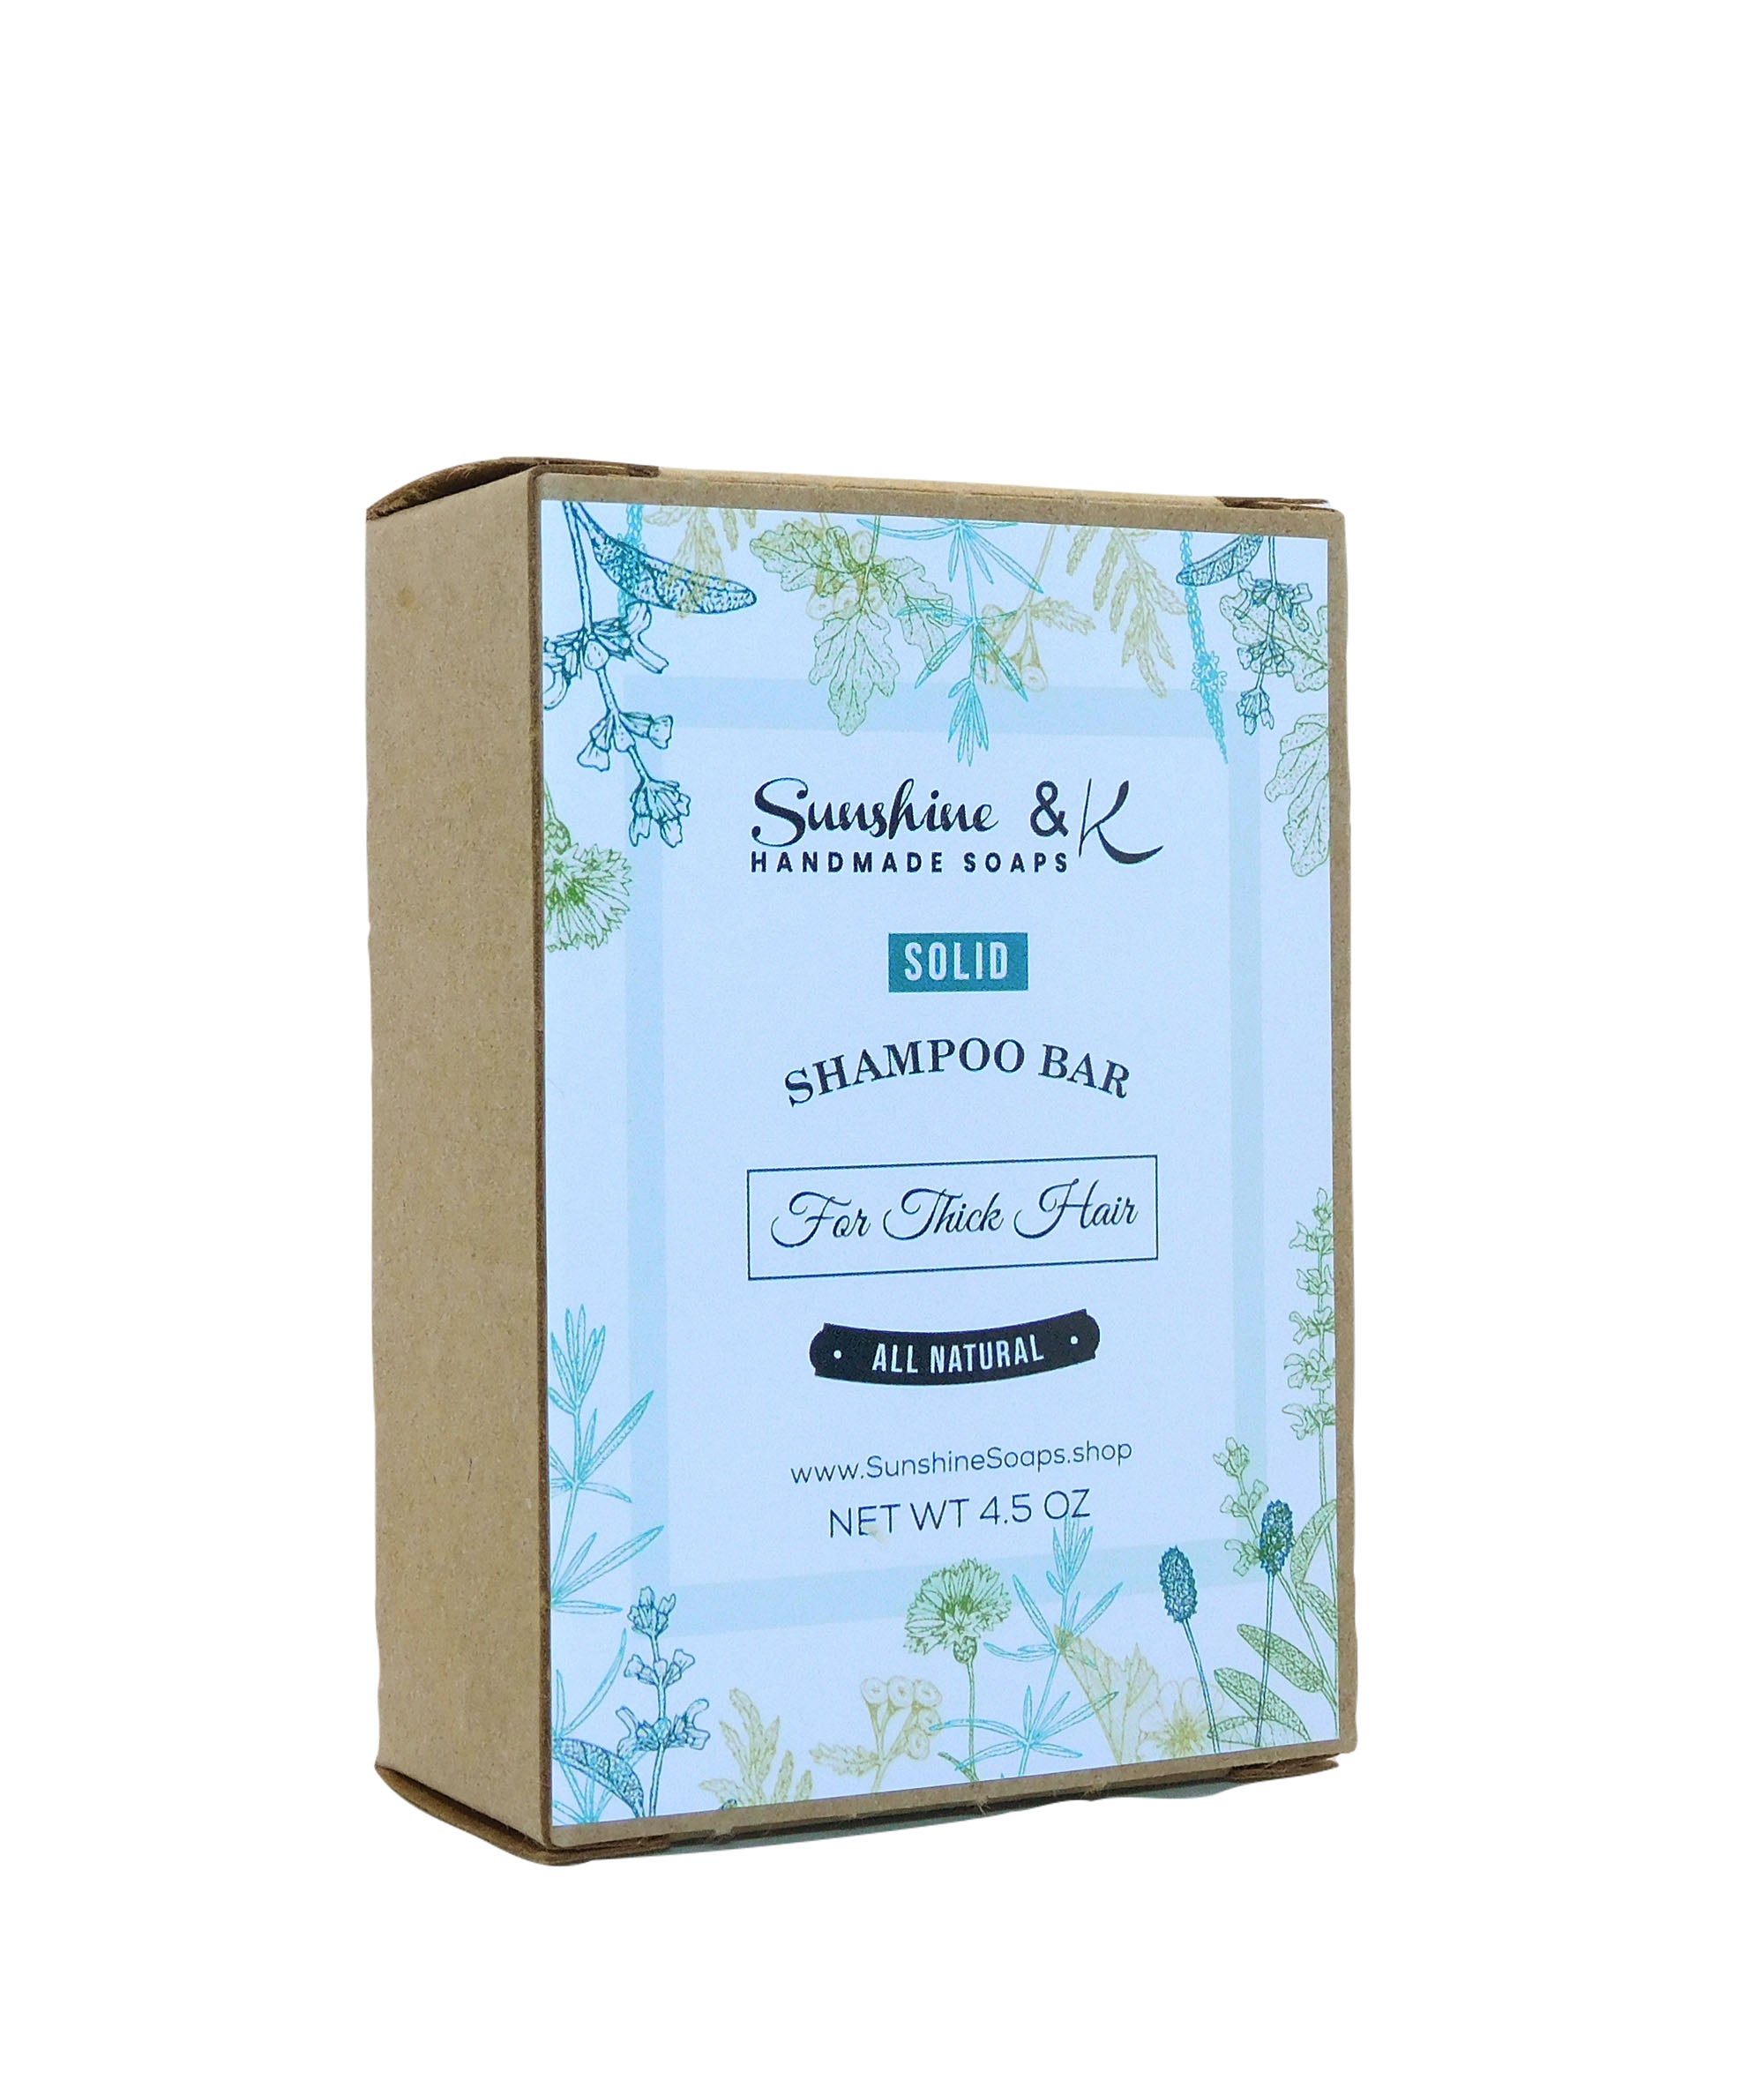 Shampoo Bar – Natural Handmade Shampoo for Thick & Dry Hair